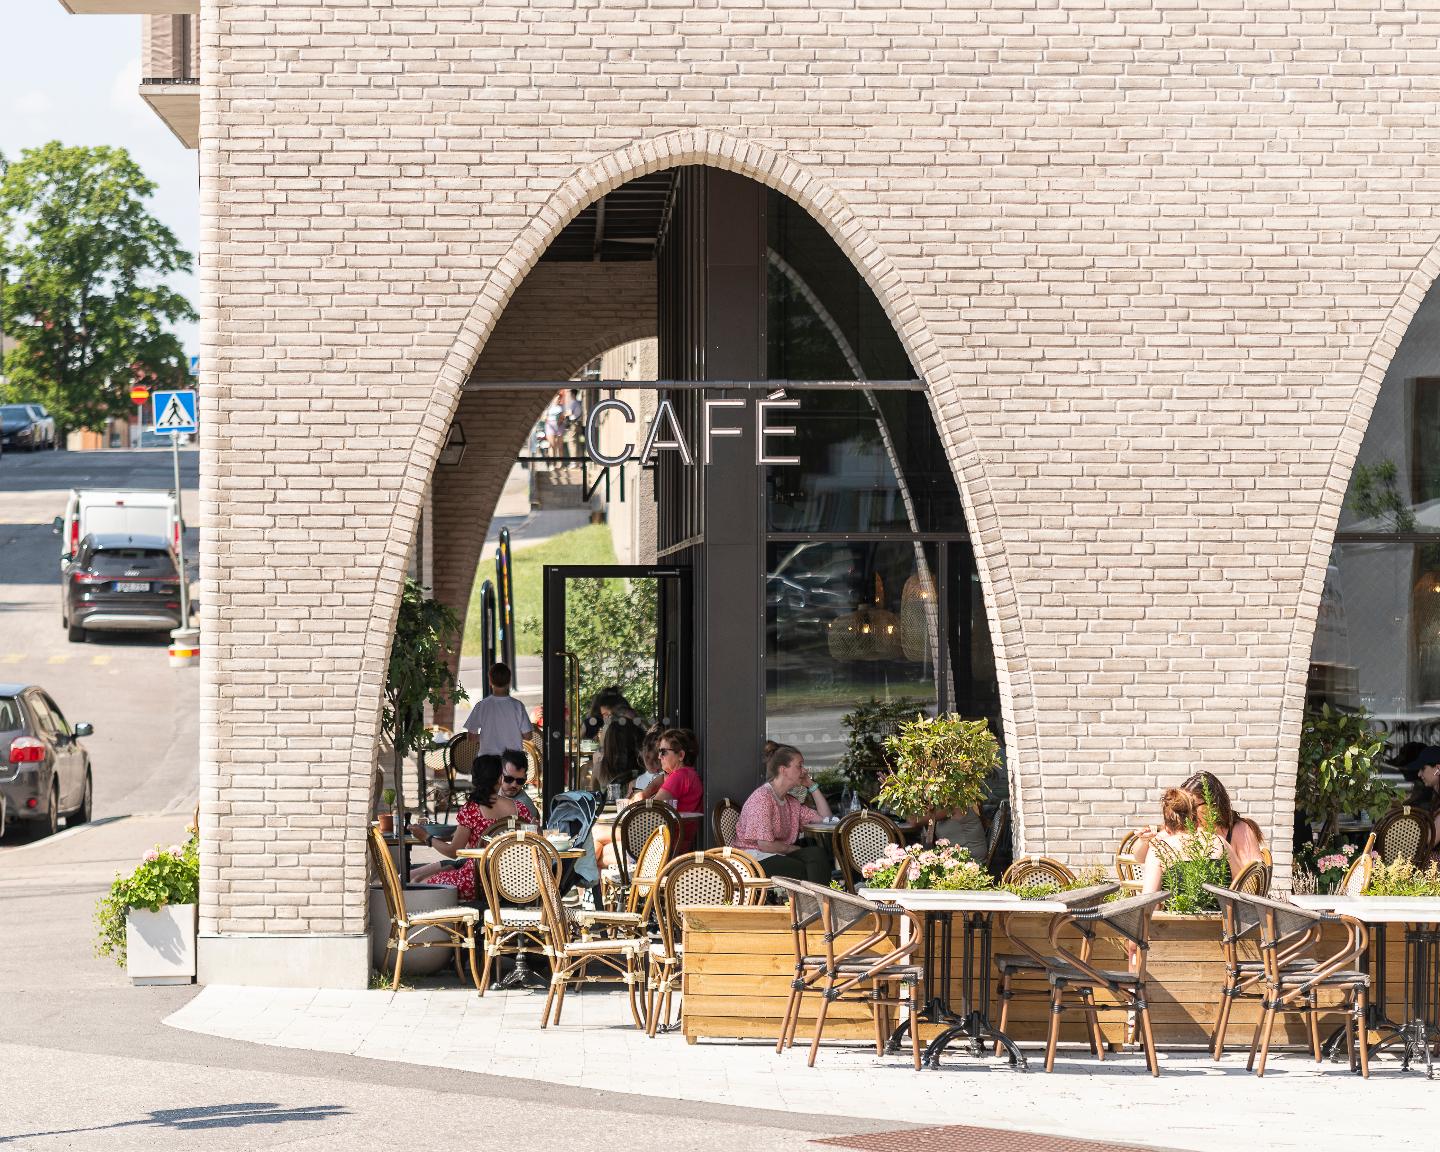 Café med uteservering i Sundbyberg